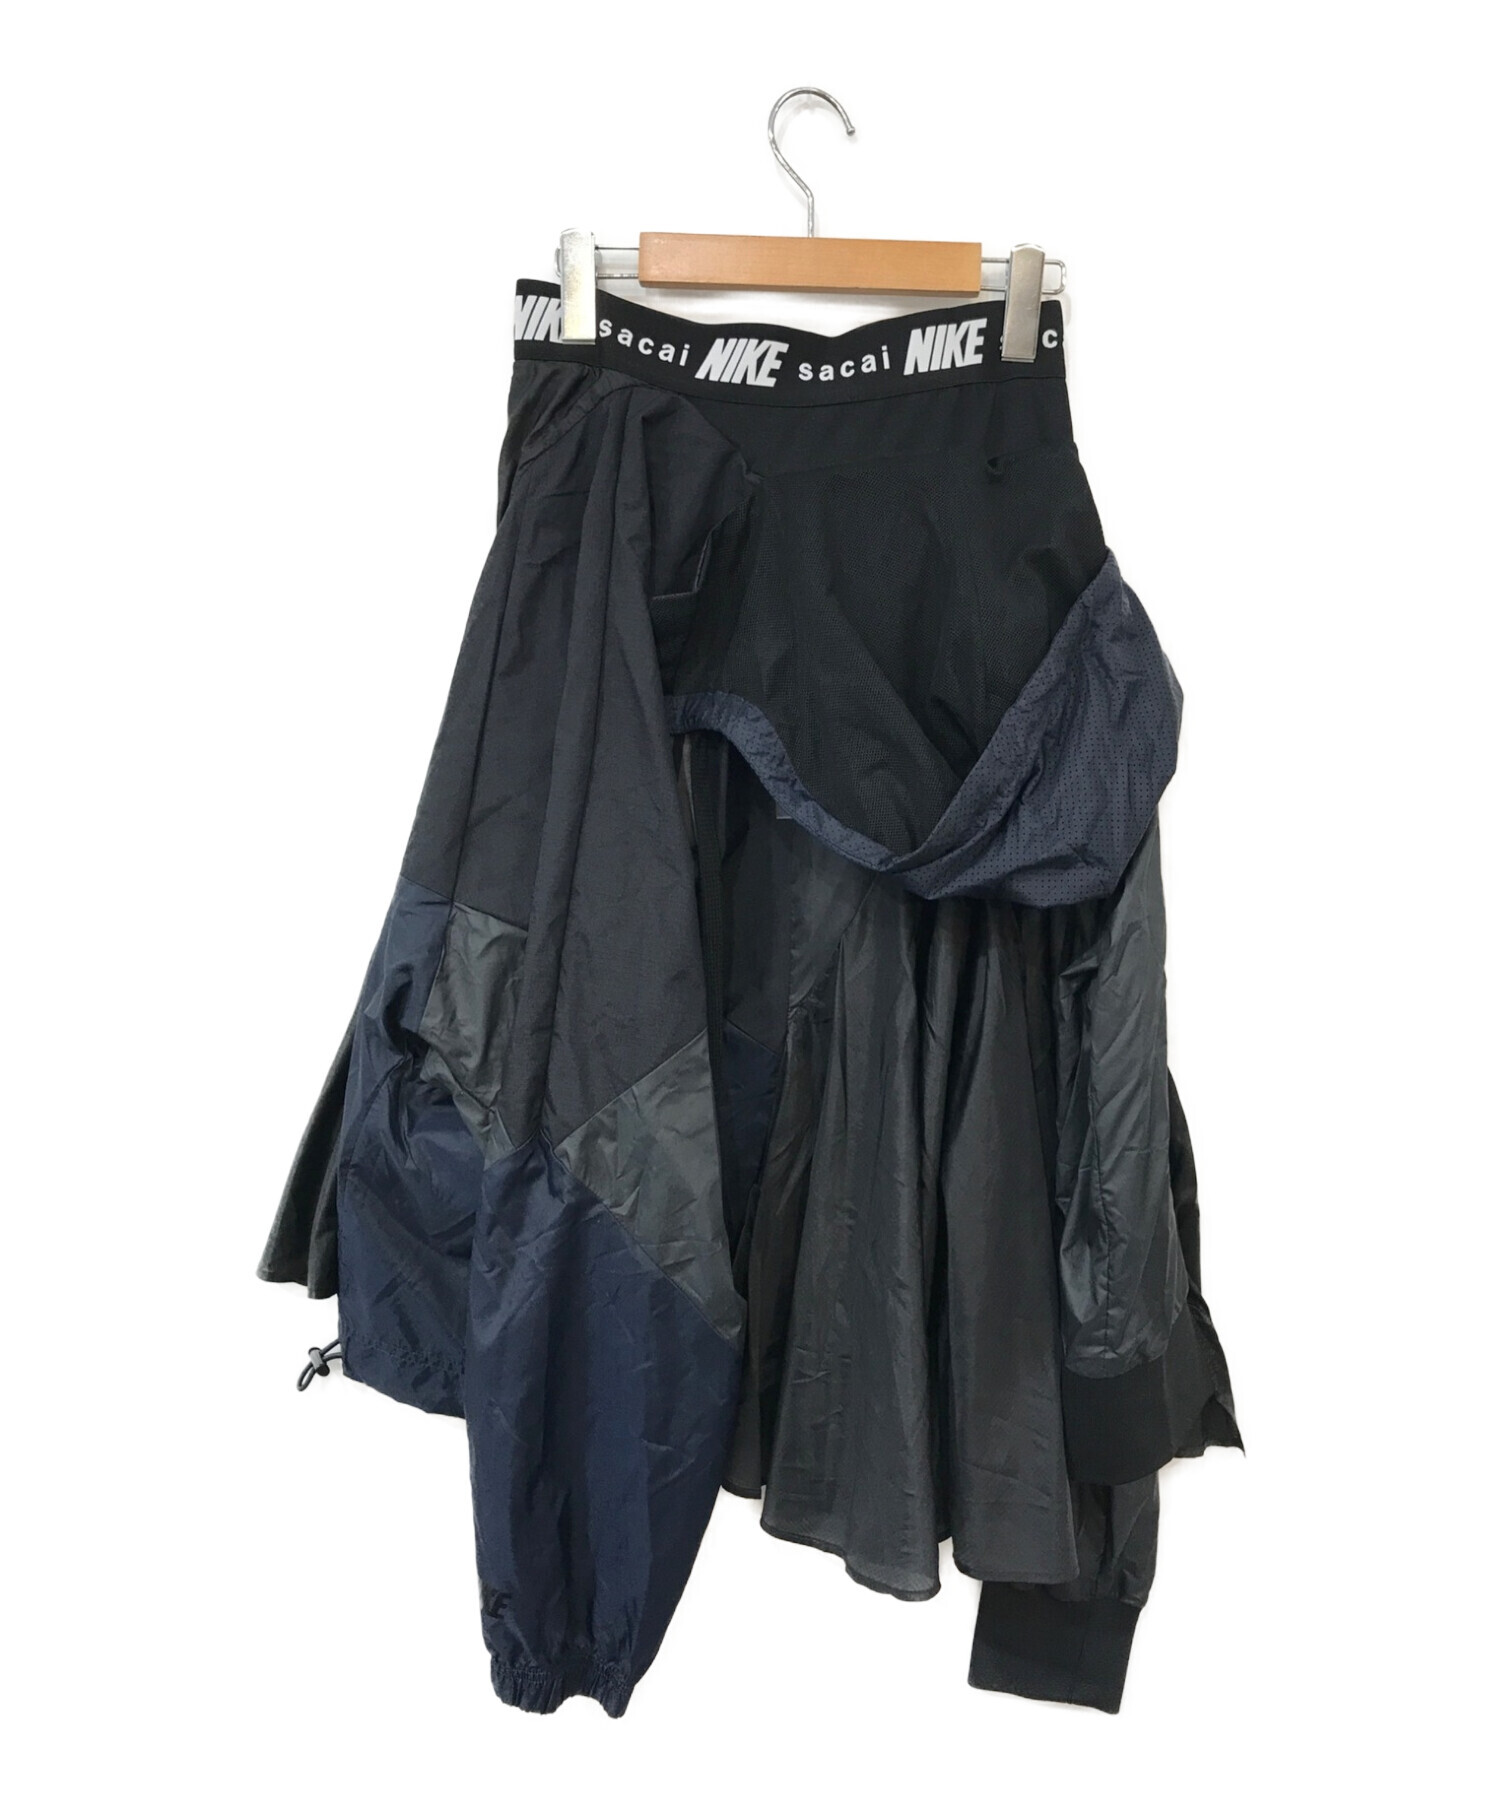 NIKE (ナイキ) sacai (サカイ) 再構築ナイロンスカート ブラック サイズ:S